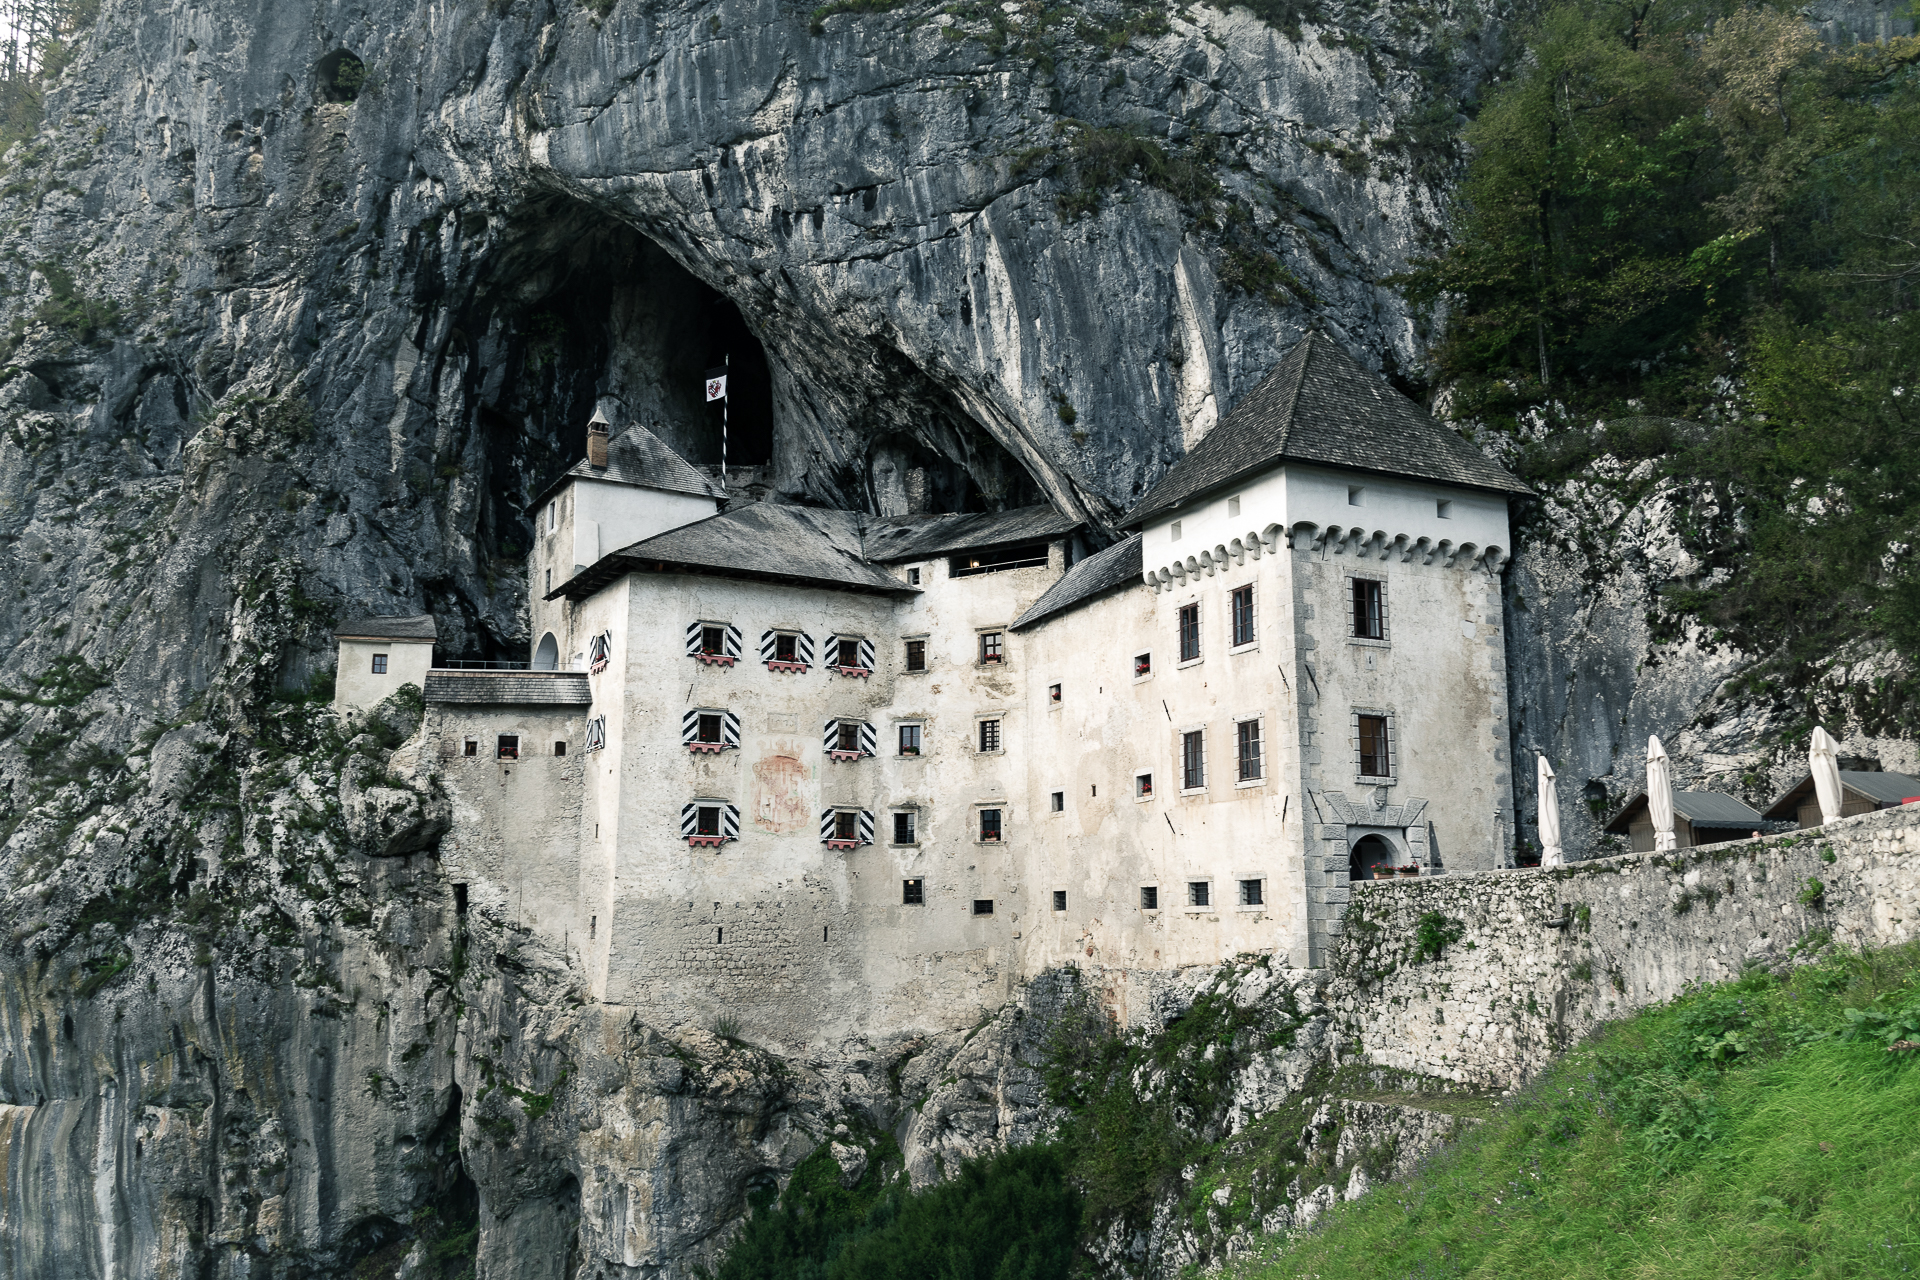 The Predjama castle cave in a large rock in Slovenia